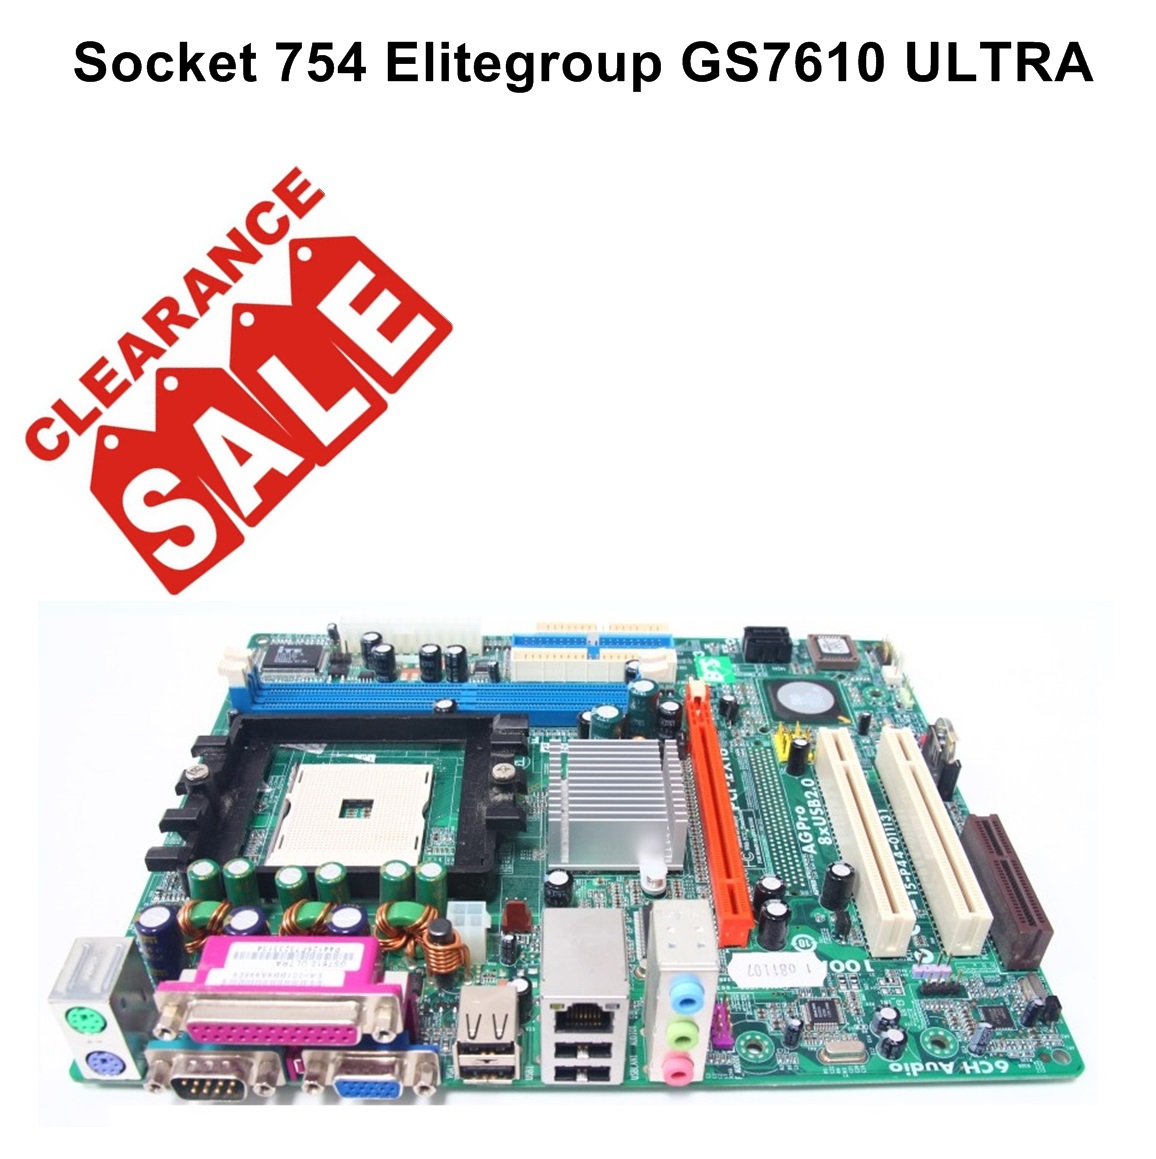 Socket 754 Elitegroup GS7610 ULTRA